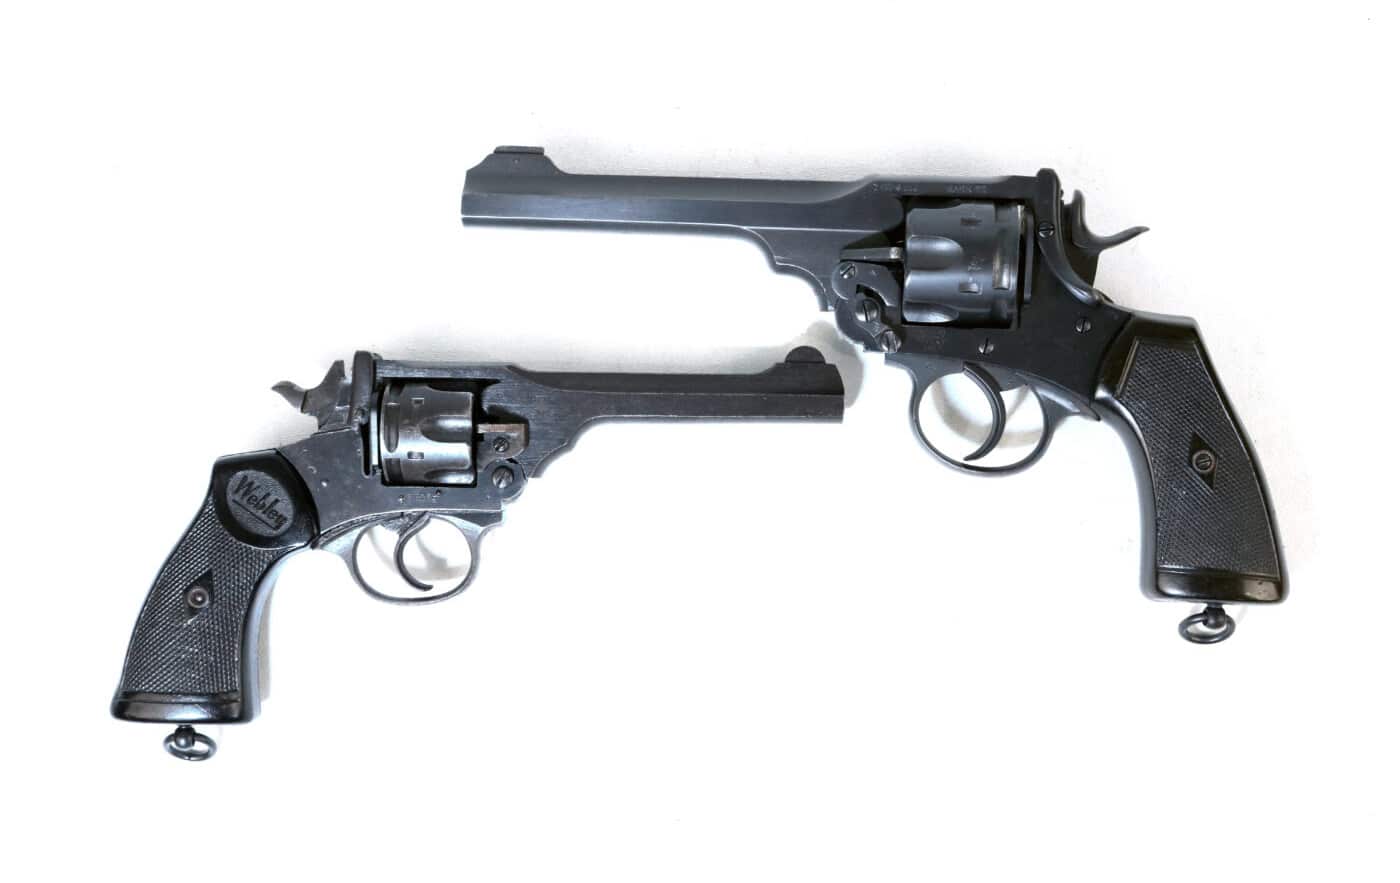 Different caliber Webley revolvers compared